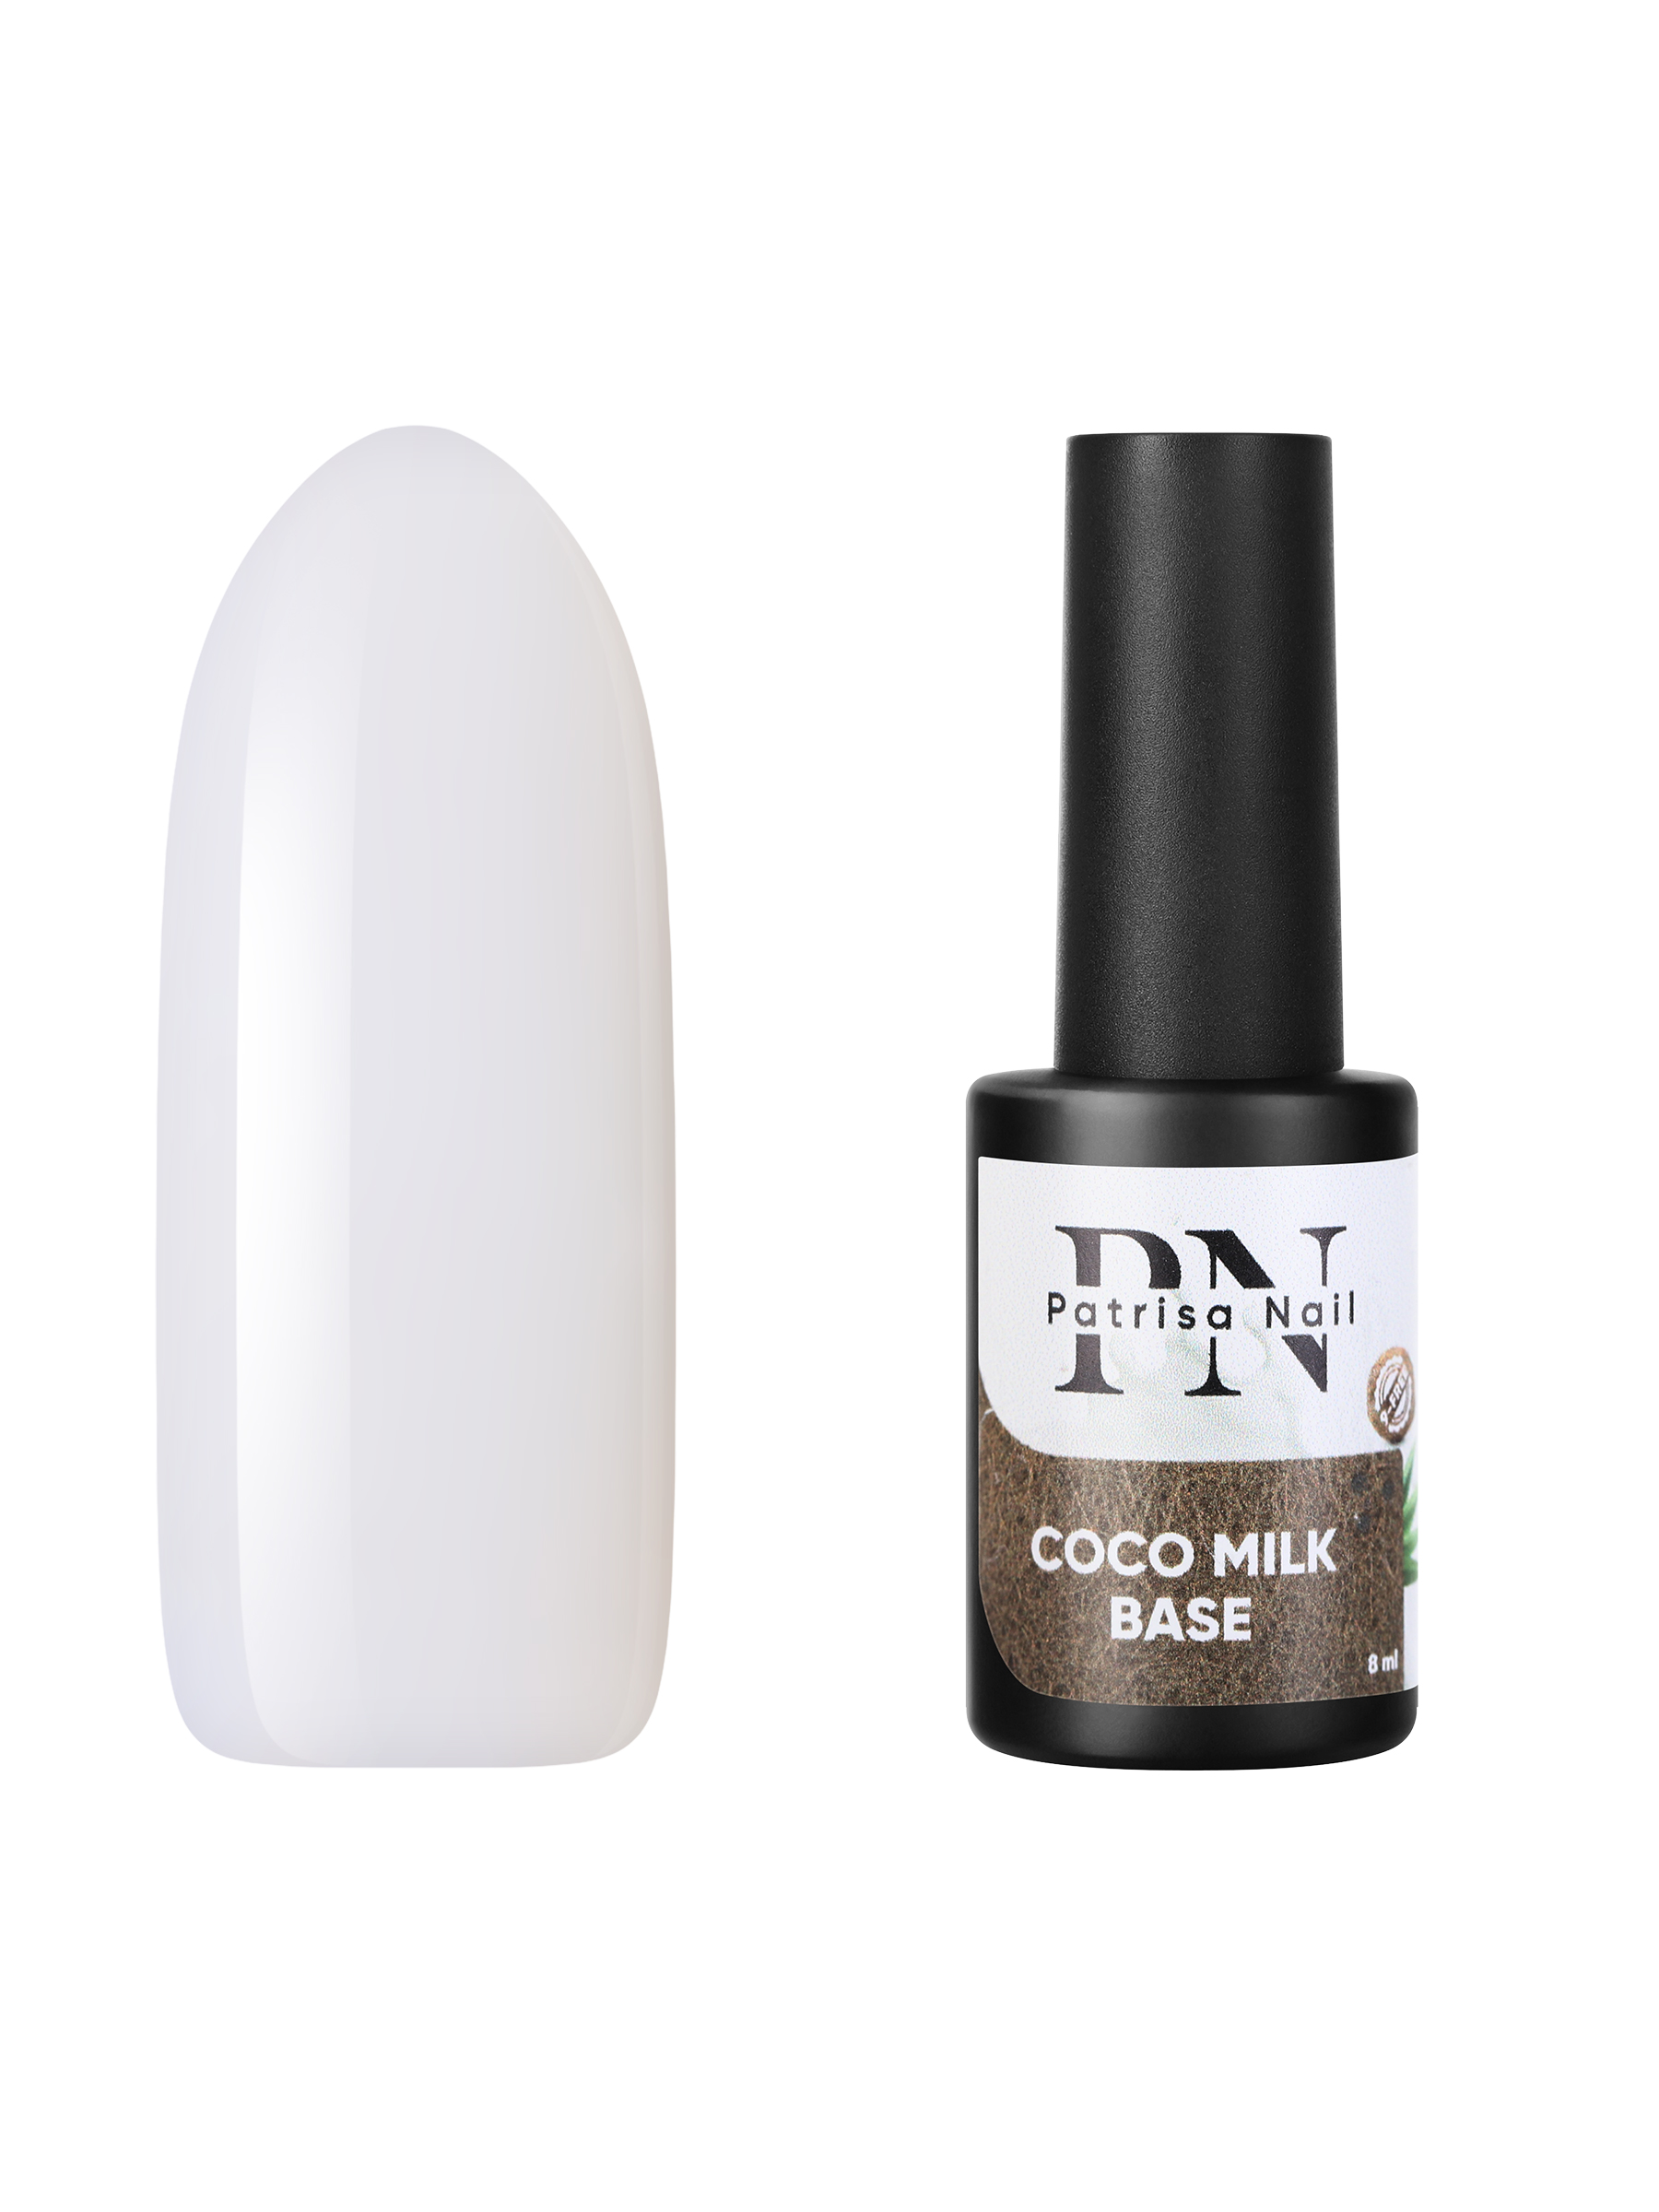 База для гель-лака Patrisa Nail Coco milk base камуфлирующая каучуковая молочная, 8 мл топ patrisa nail milk top молочный 8 мл